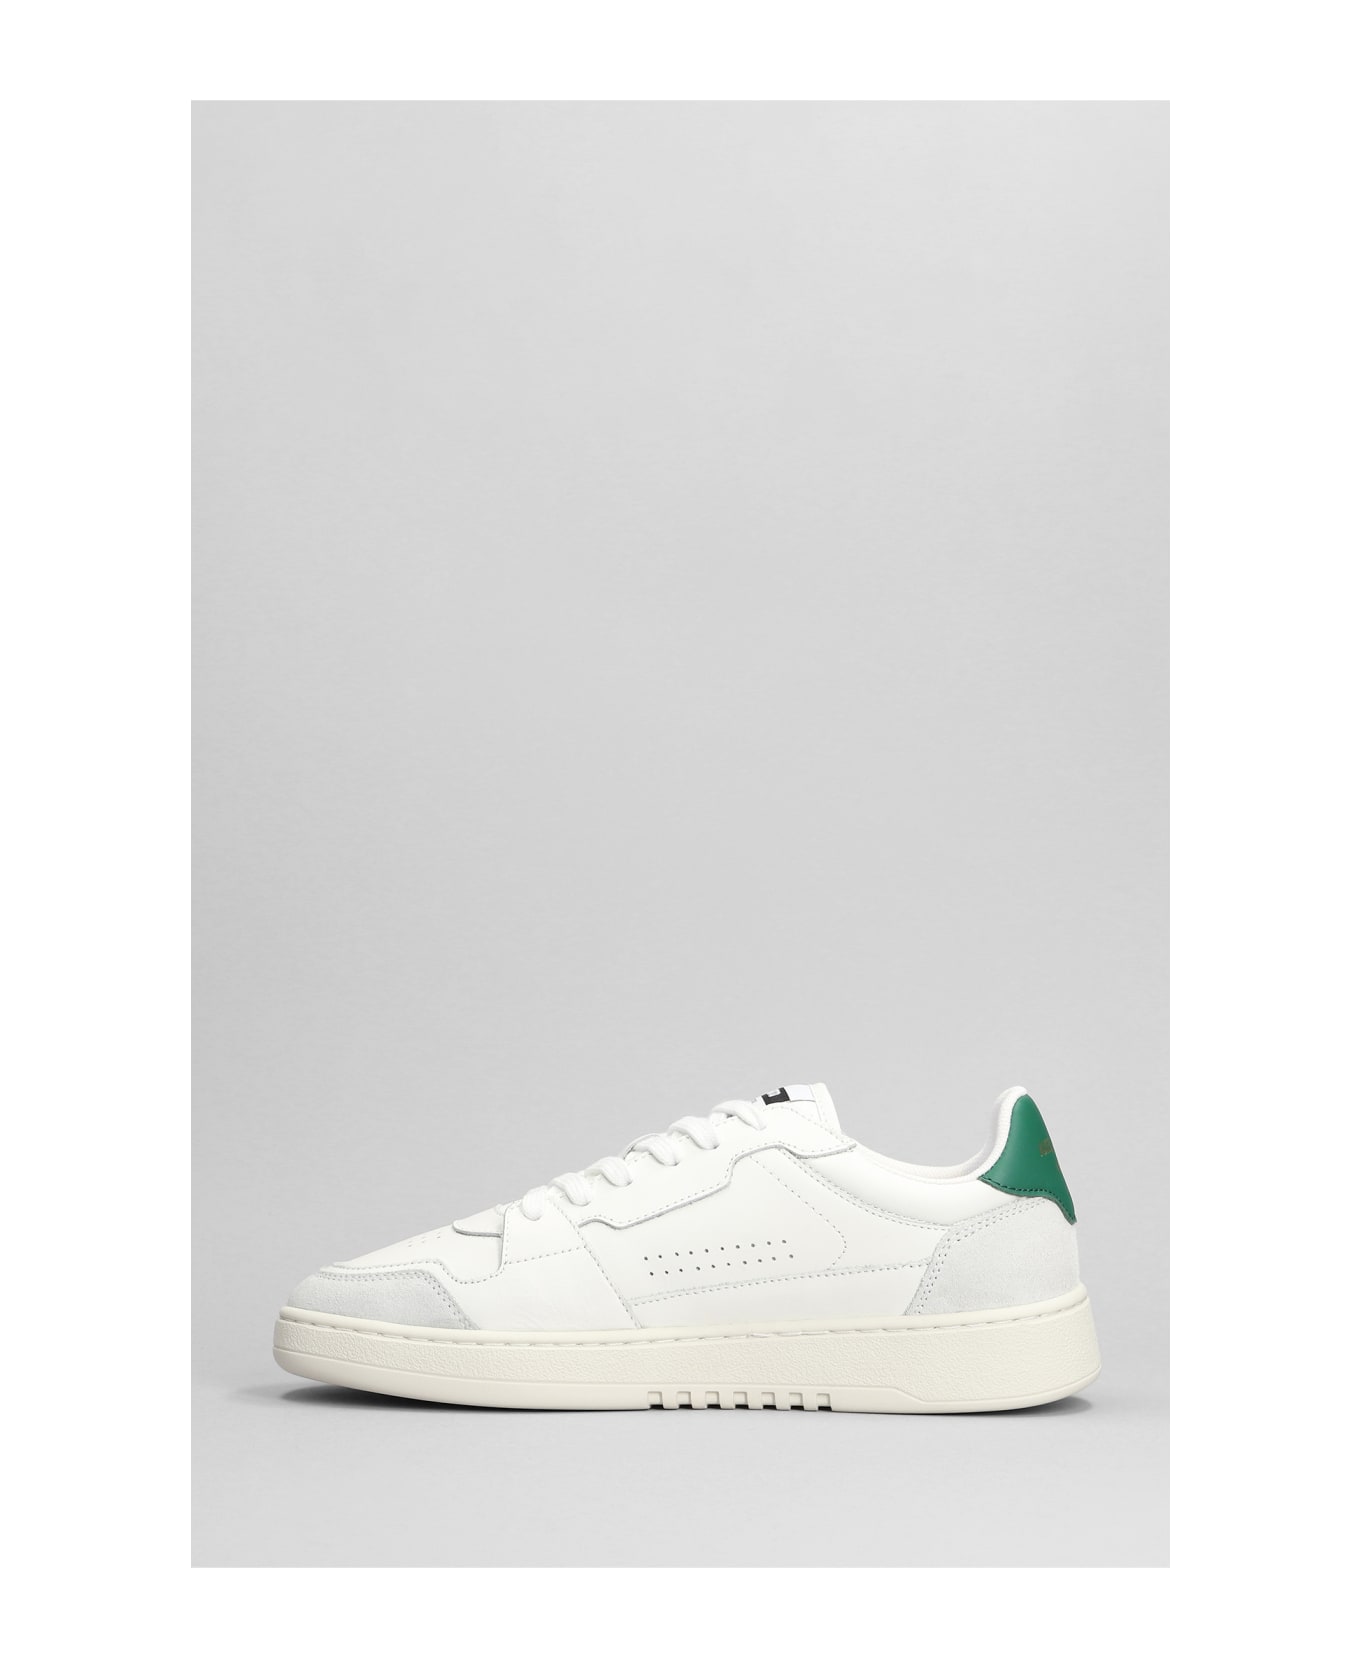 Axel Arigato Dice Lo Sneakers In White Leather - white